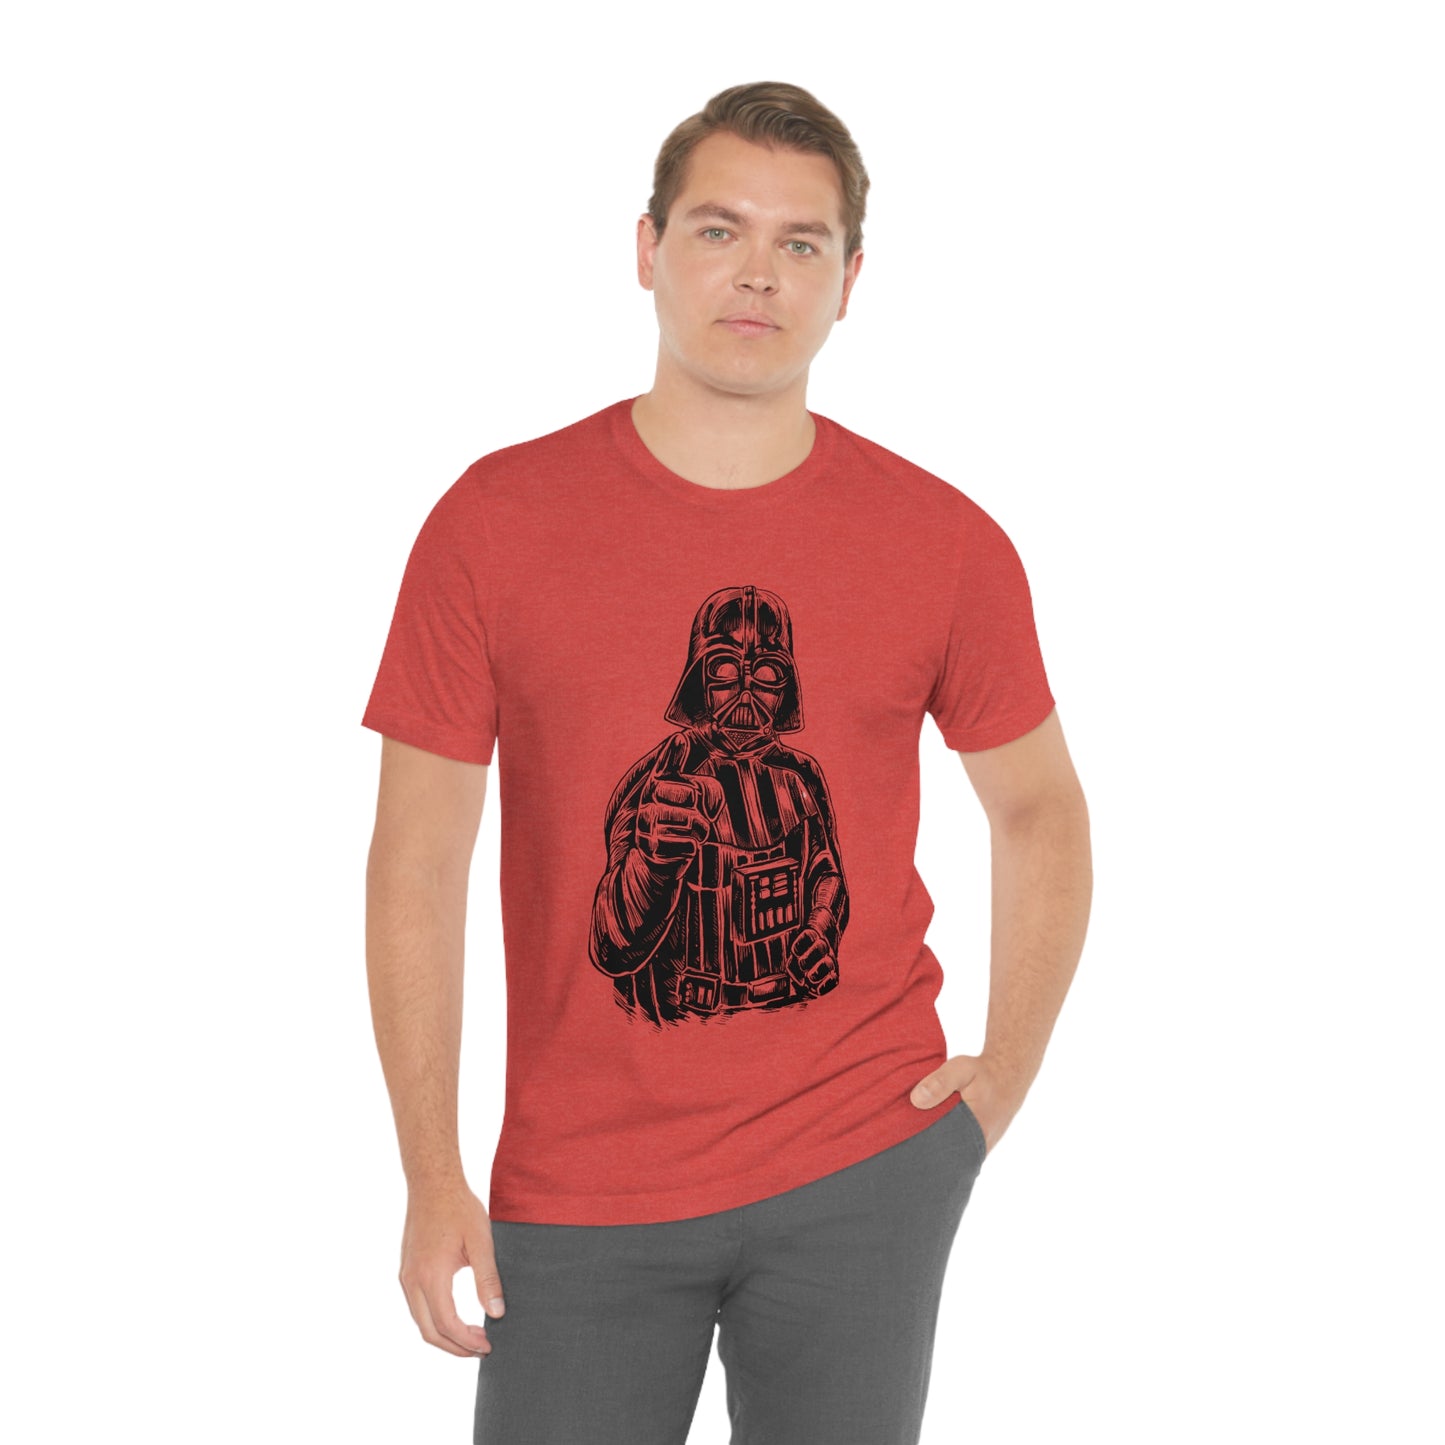 Darth Vader Wants You - Unisex T-Shirt